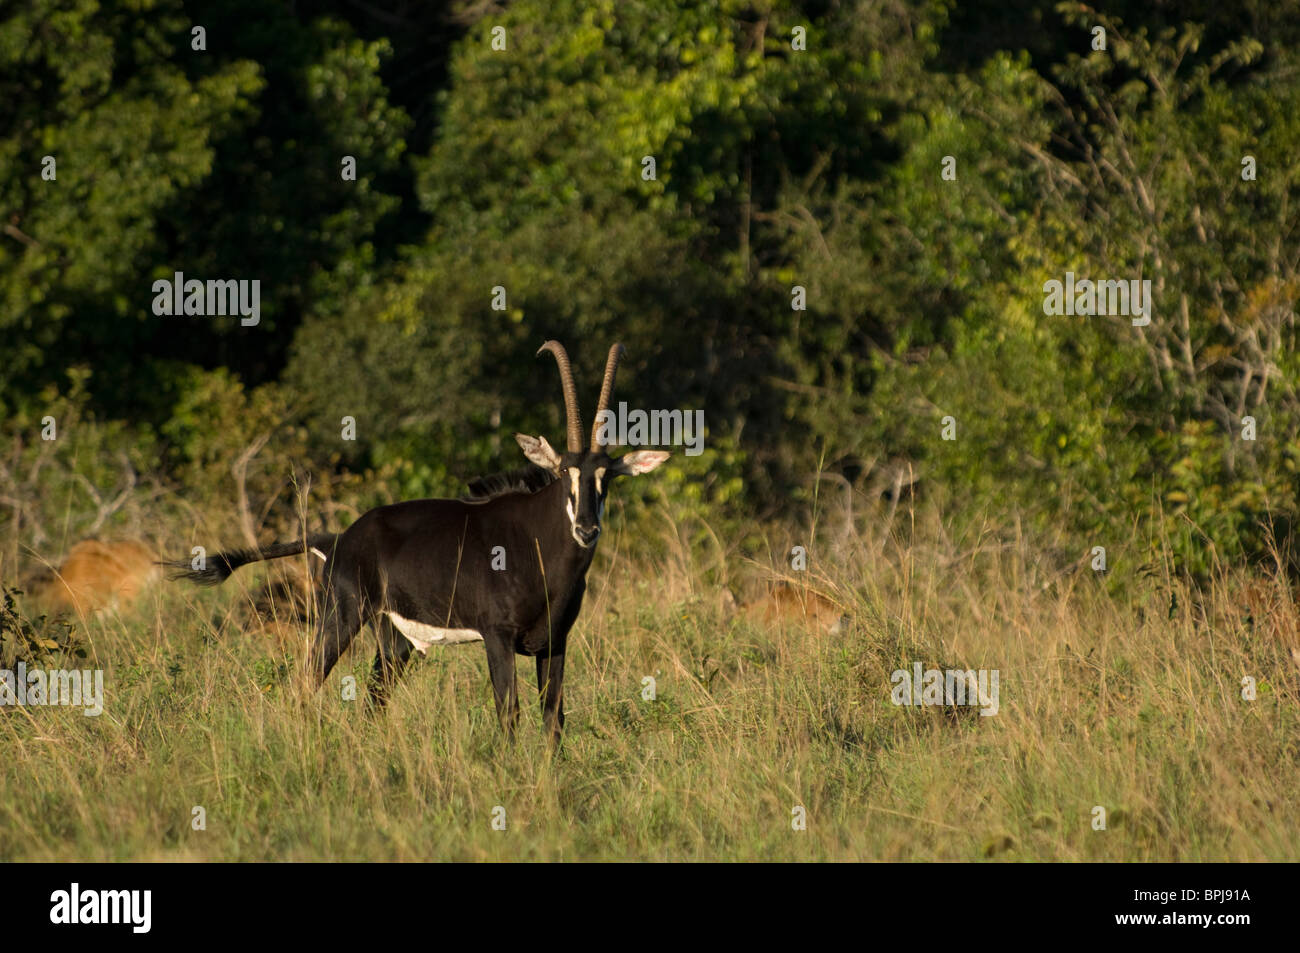 Hippotrague ( Hippotragus niger roosevelti), le site Shimba Hills National Park, Kenya Banque D'Images